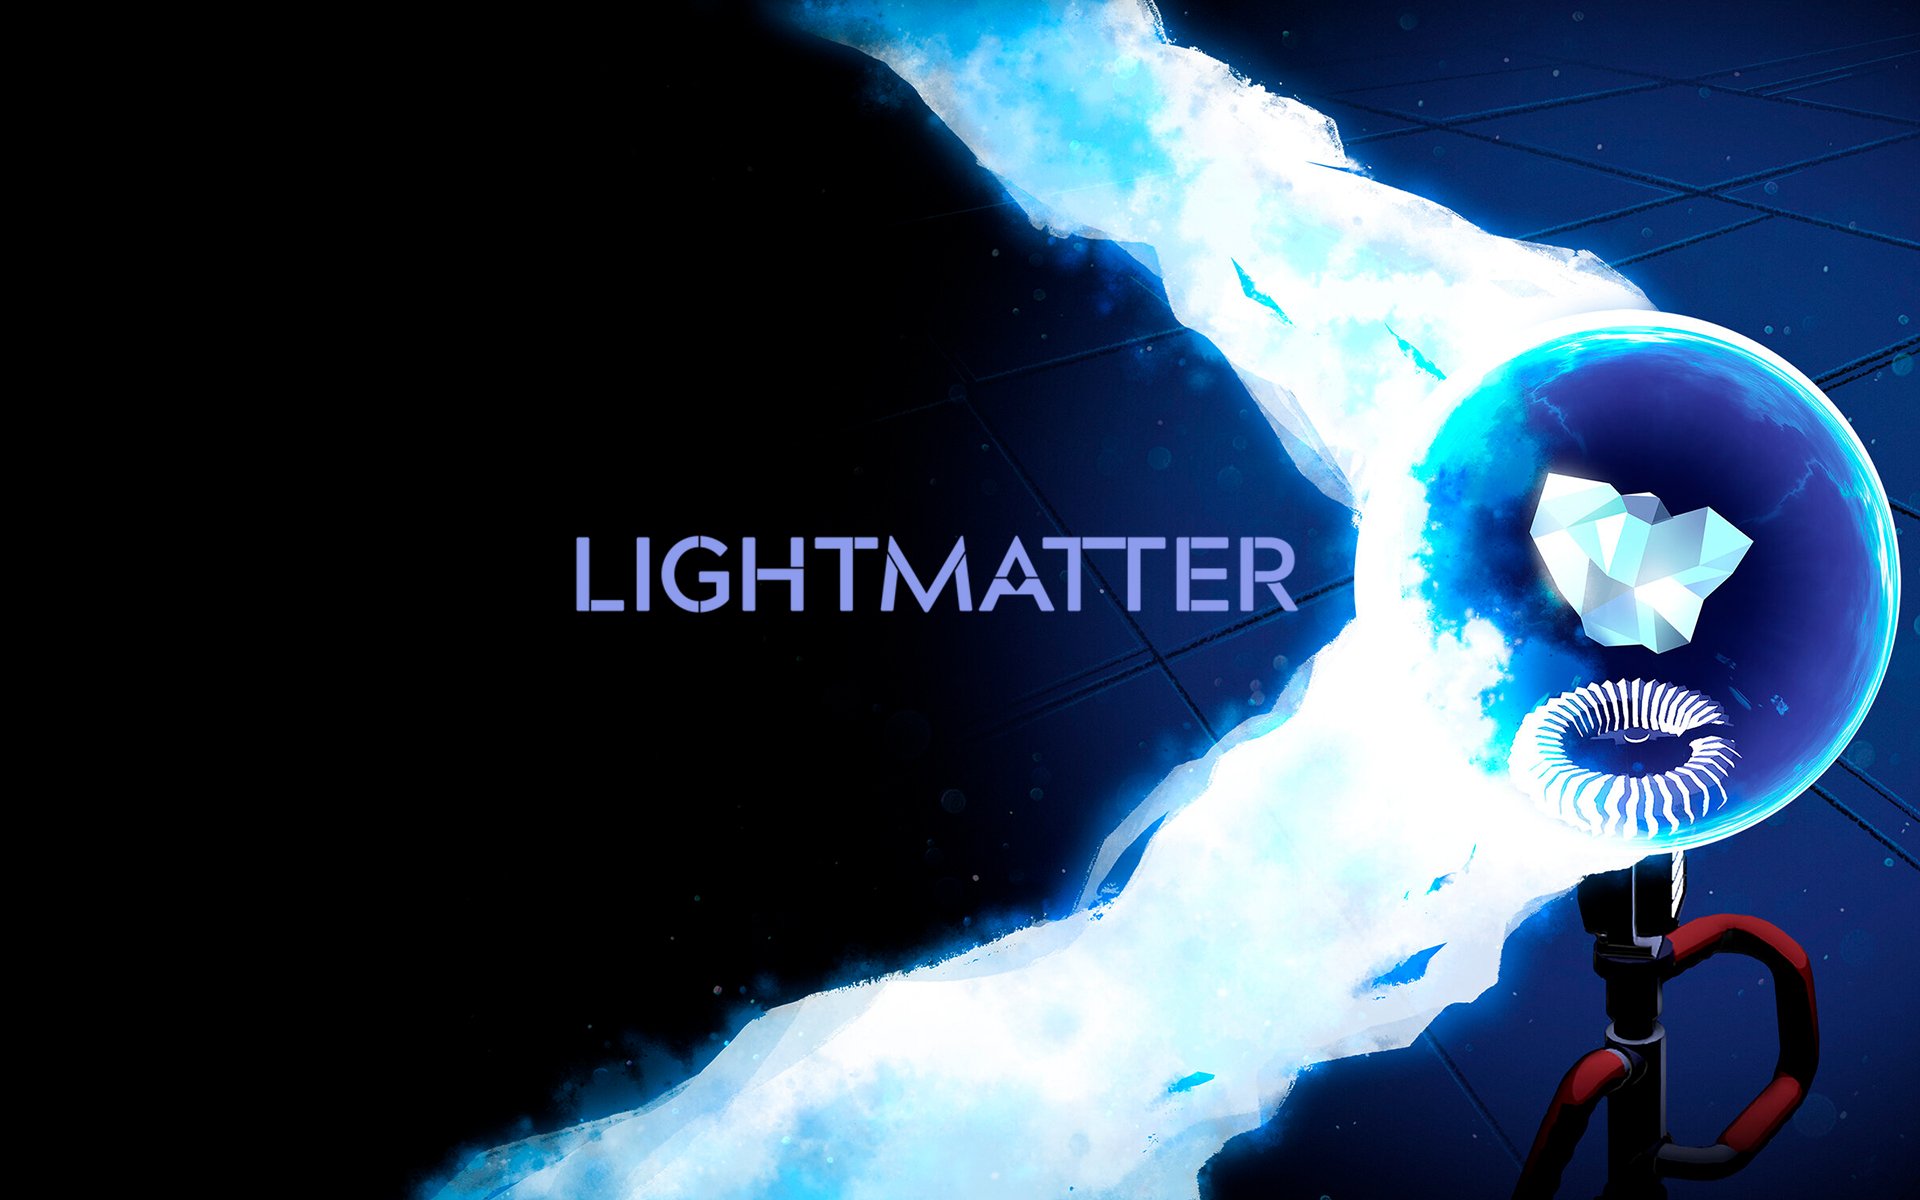 Compre Lightmatter a partir de R$ 37.99